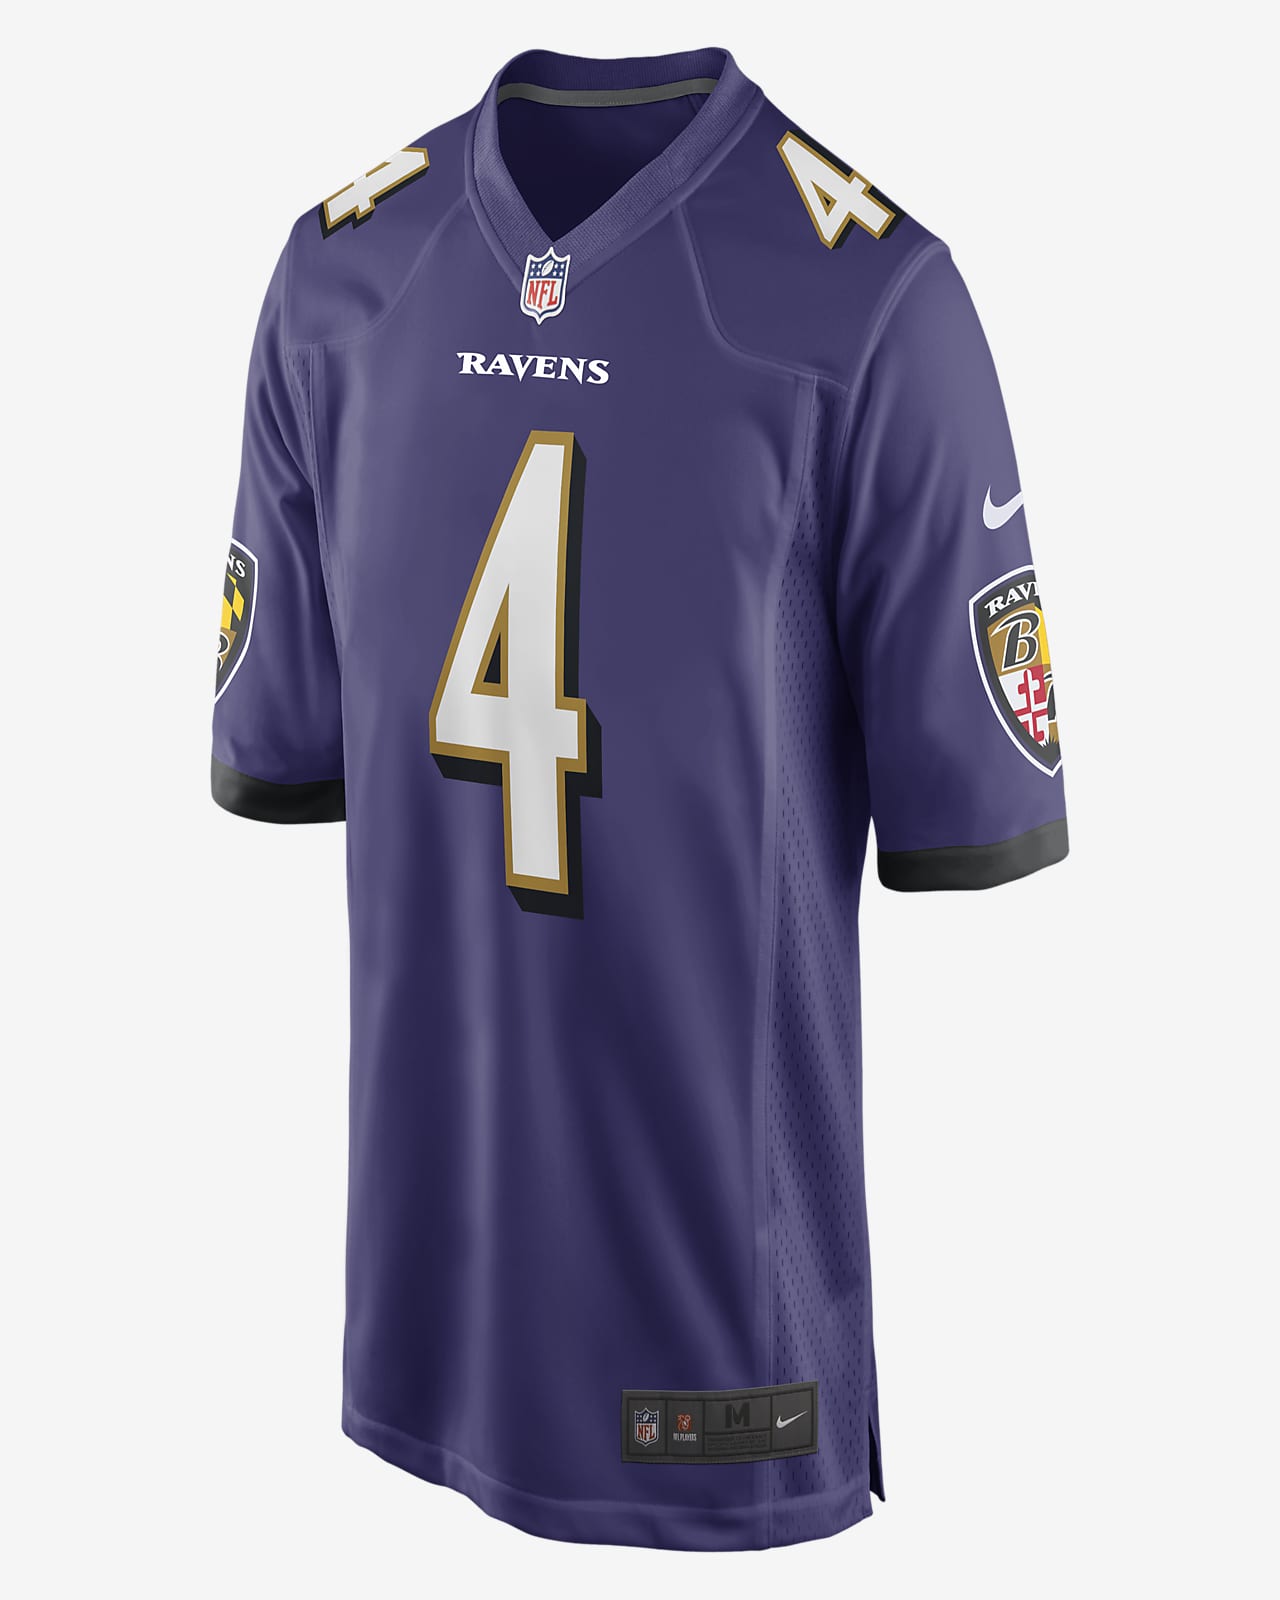 Jersey de fútbol americano Nike Game de la NFL para hombre Zay Flowers Baltimore Ravens